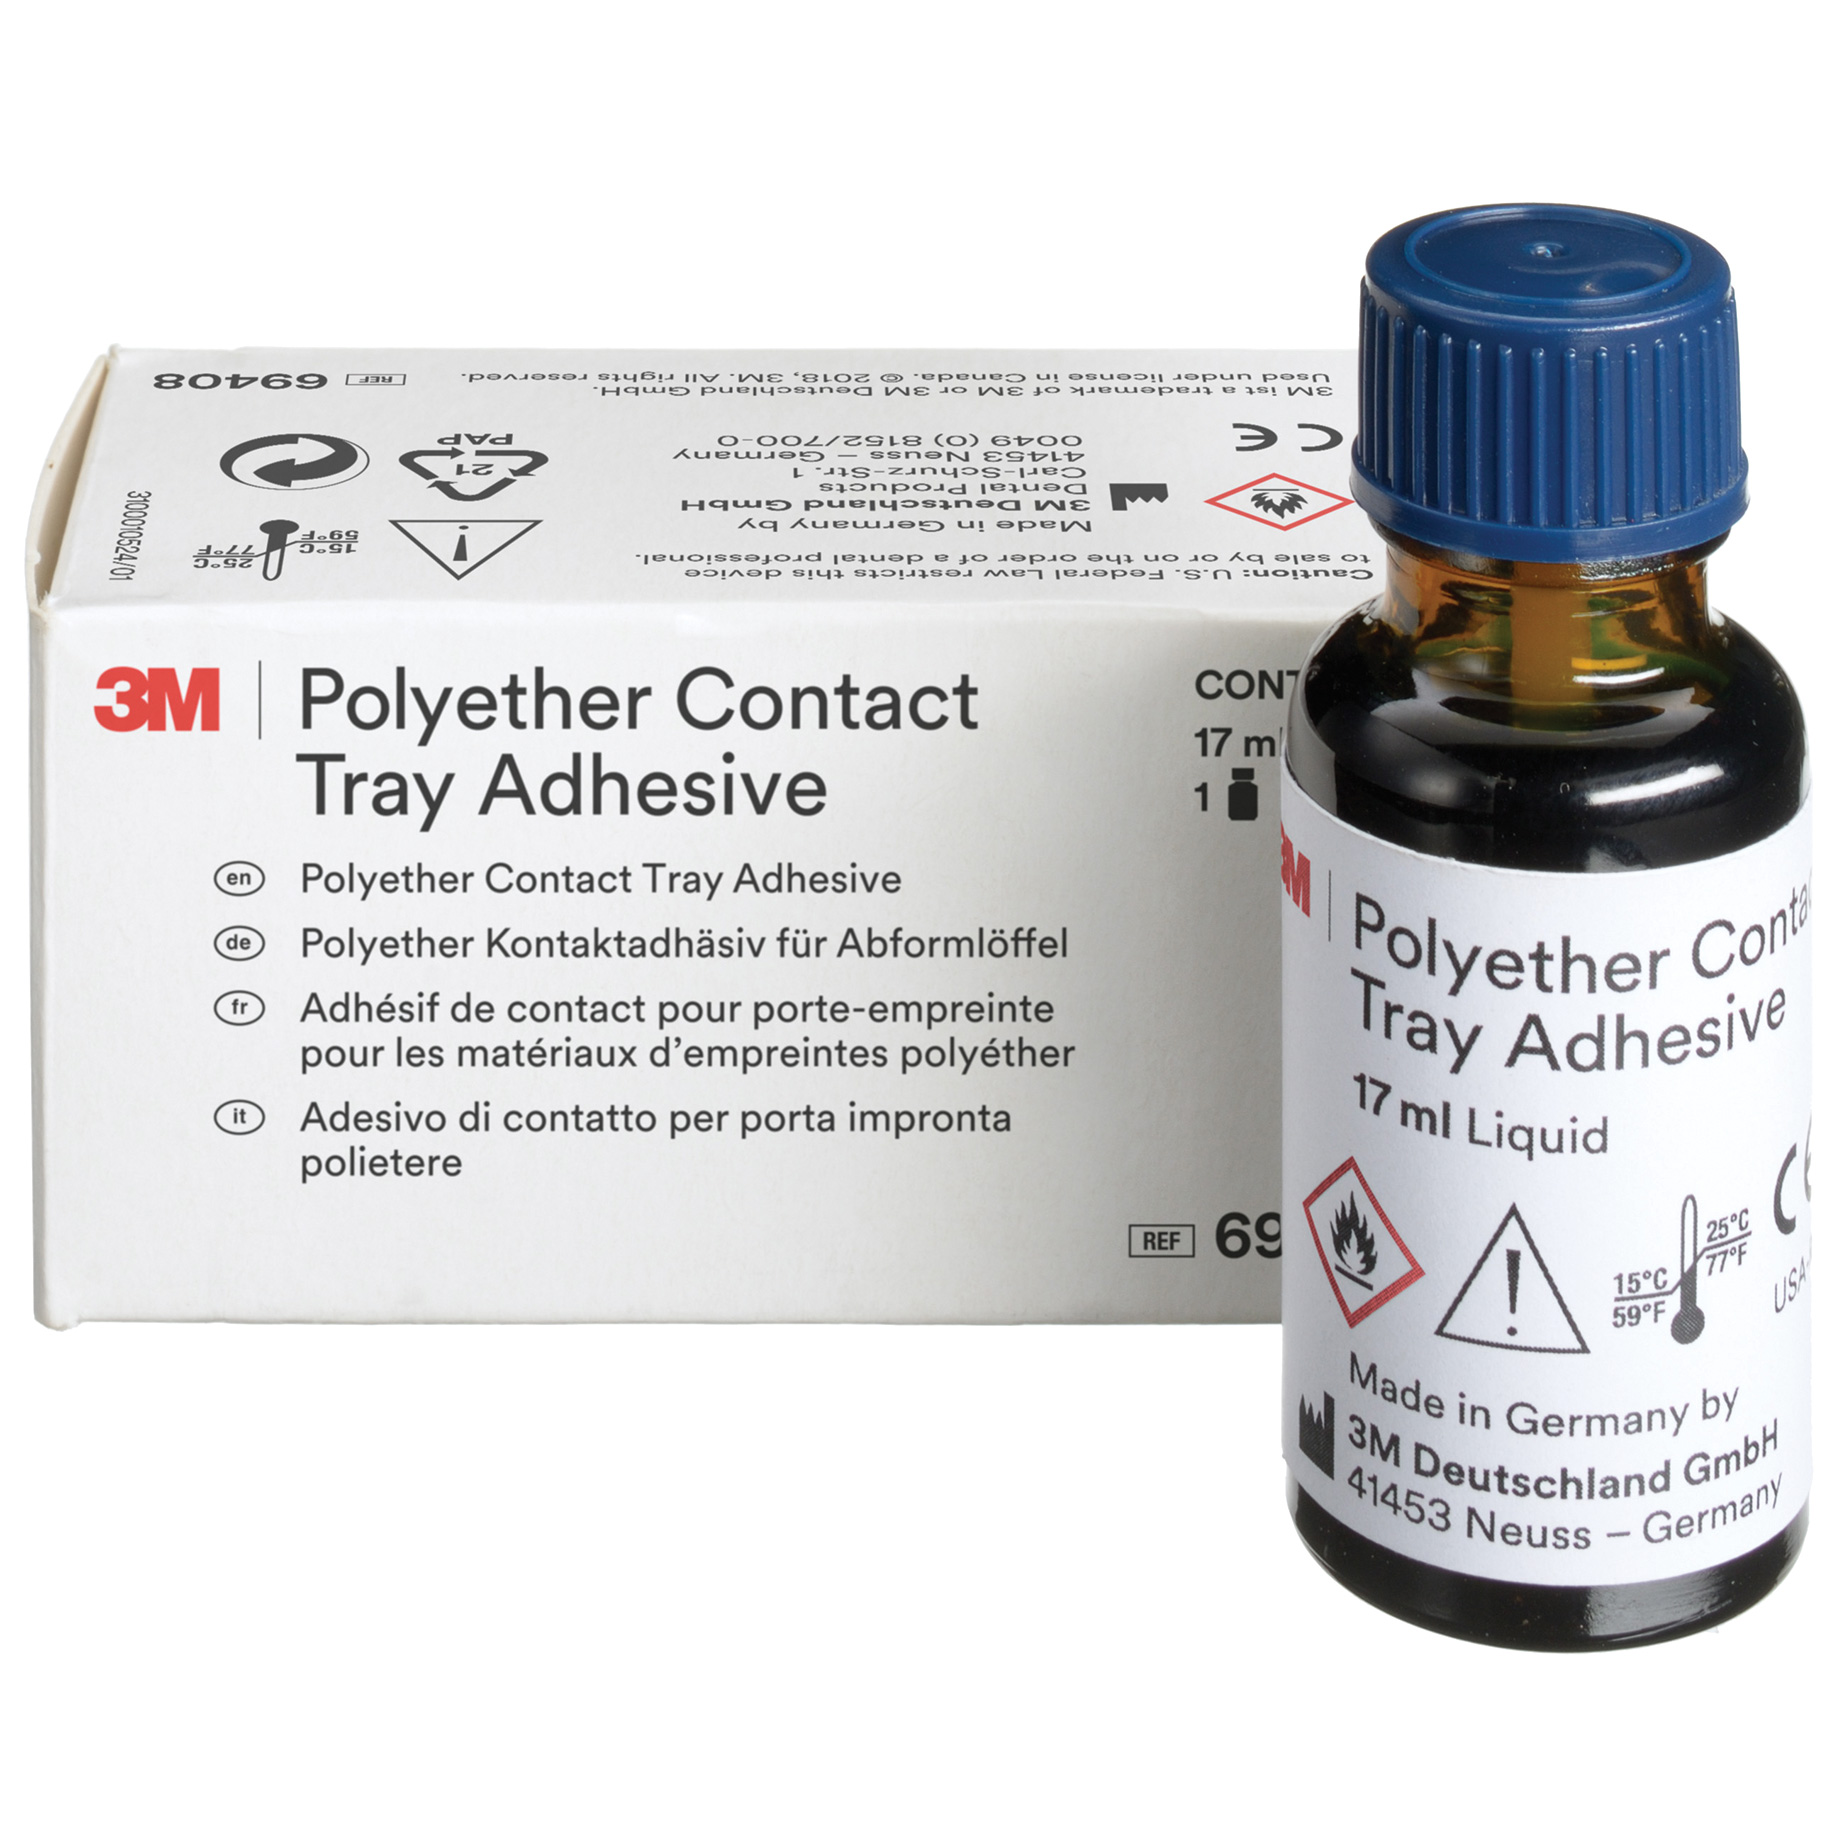 Polyether Contact Tray Adhesive 